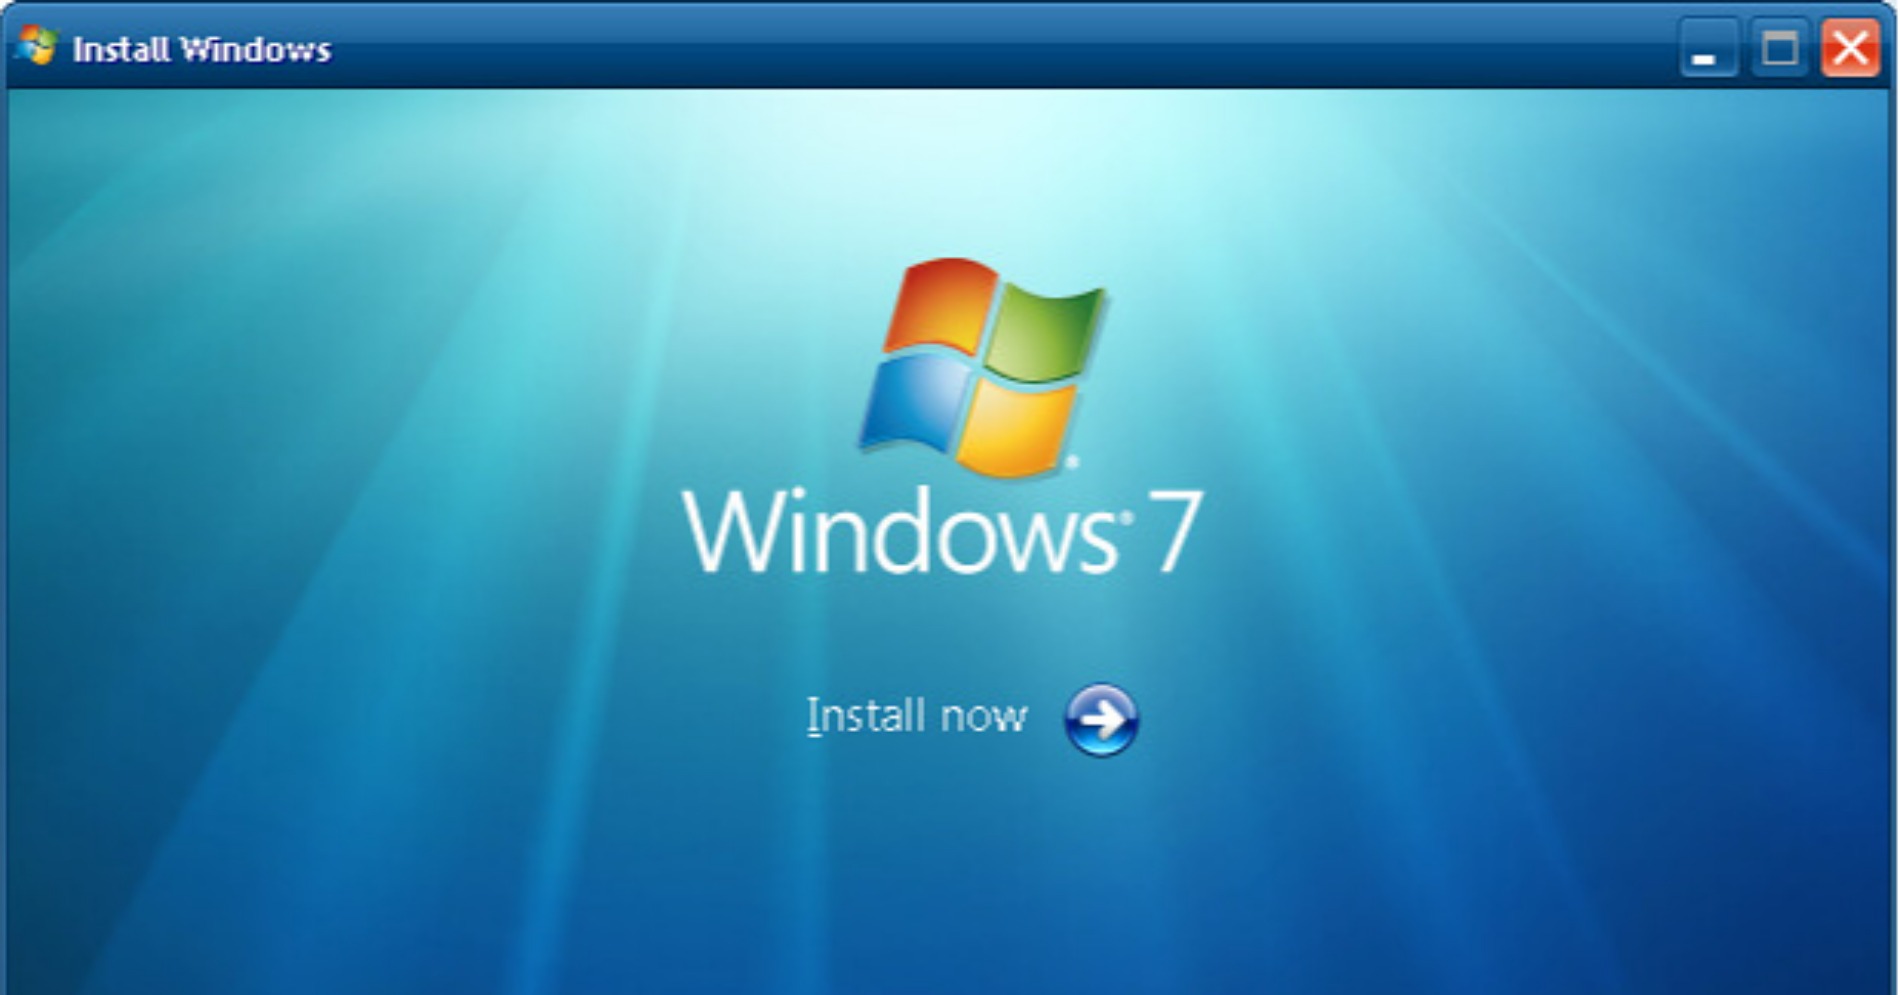 Windows 7 (Sumber gambar: Flickr)